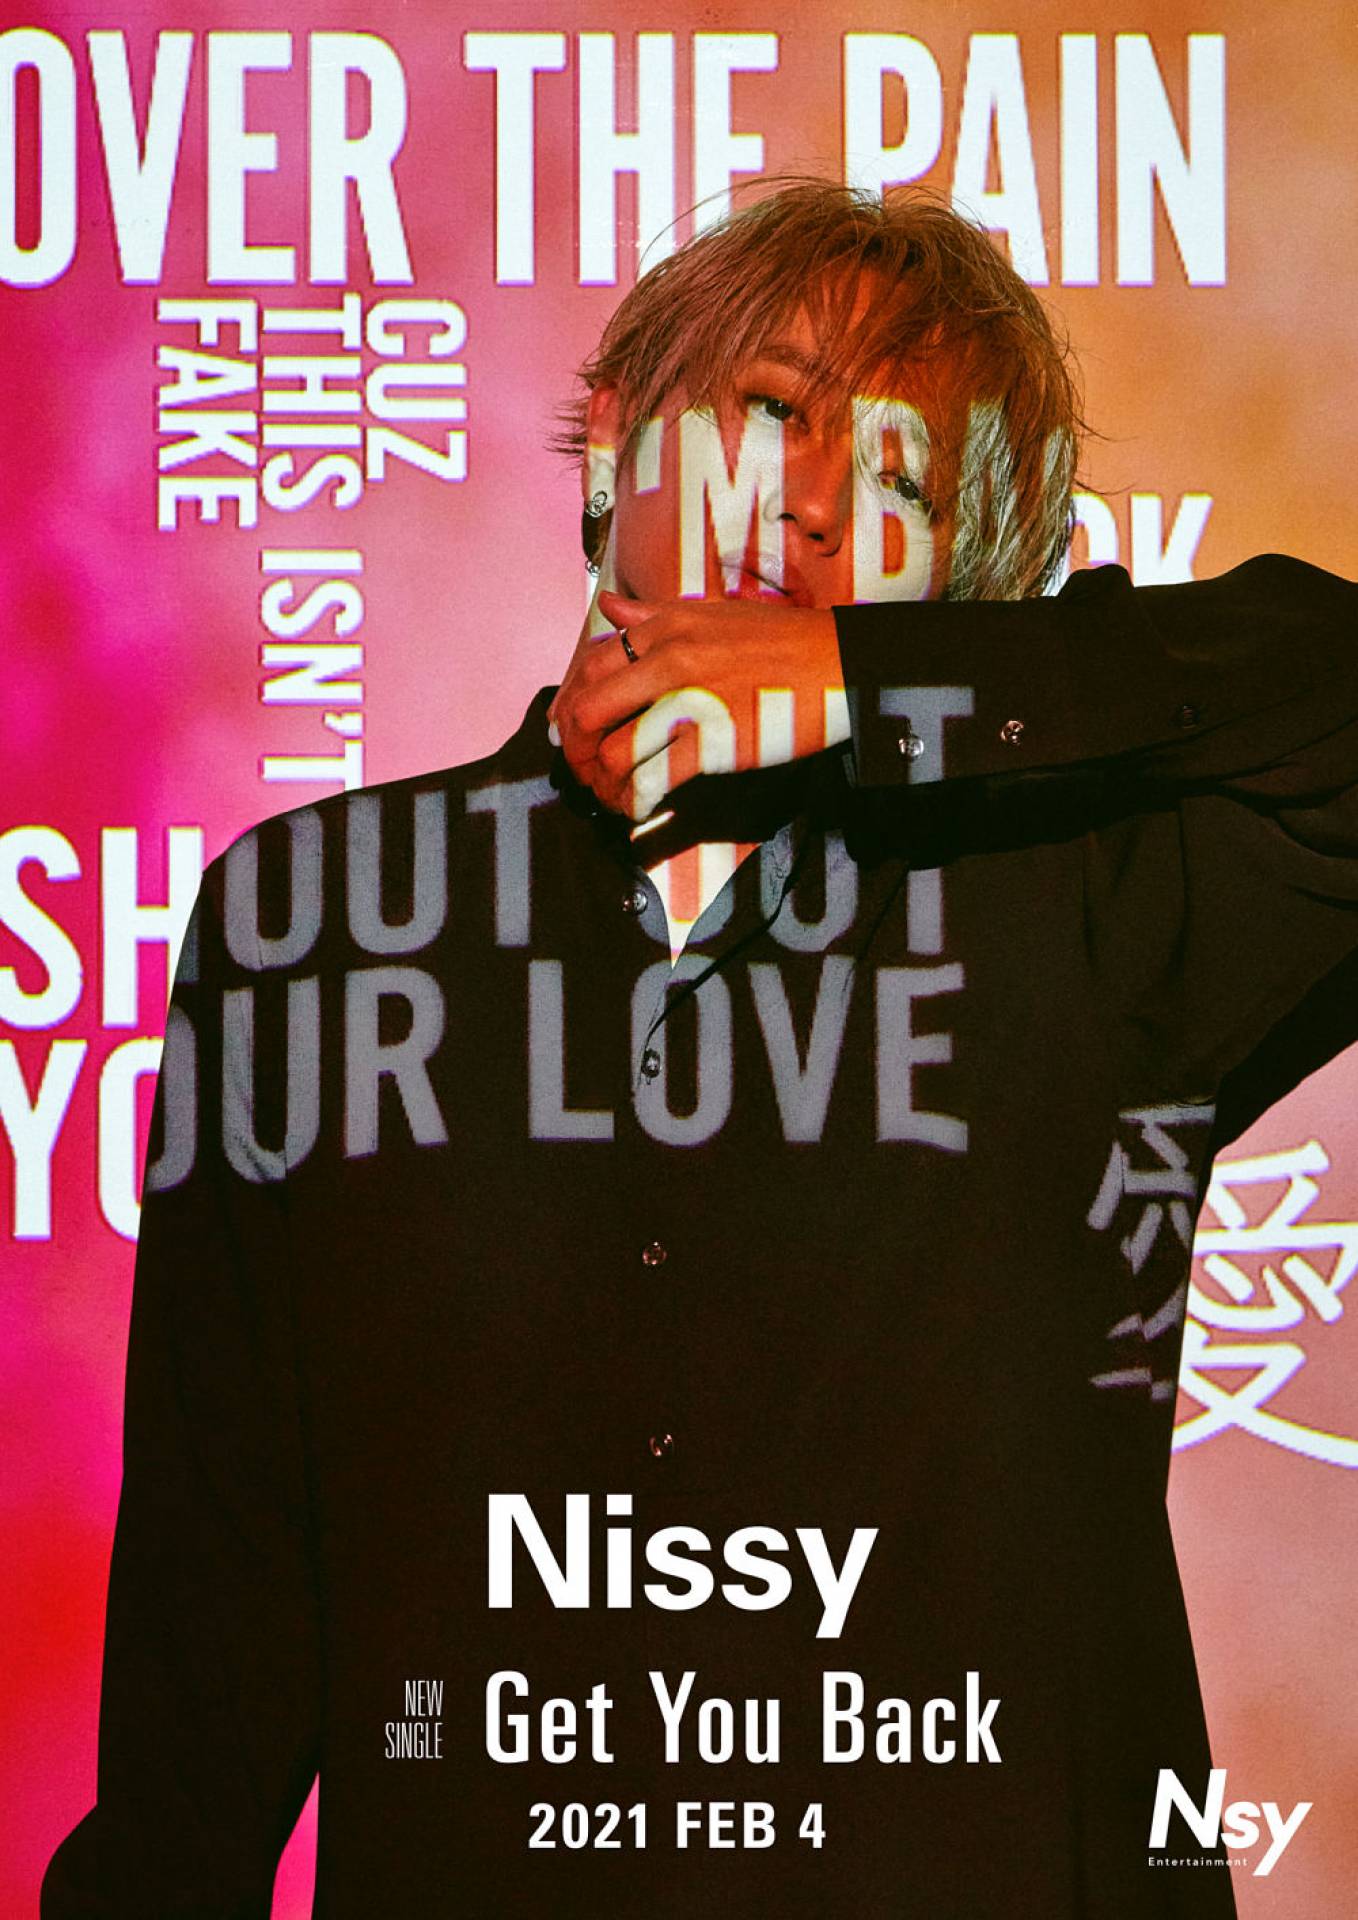 New Digital Single from Nissy